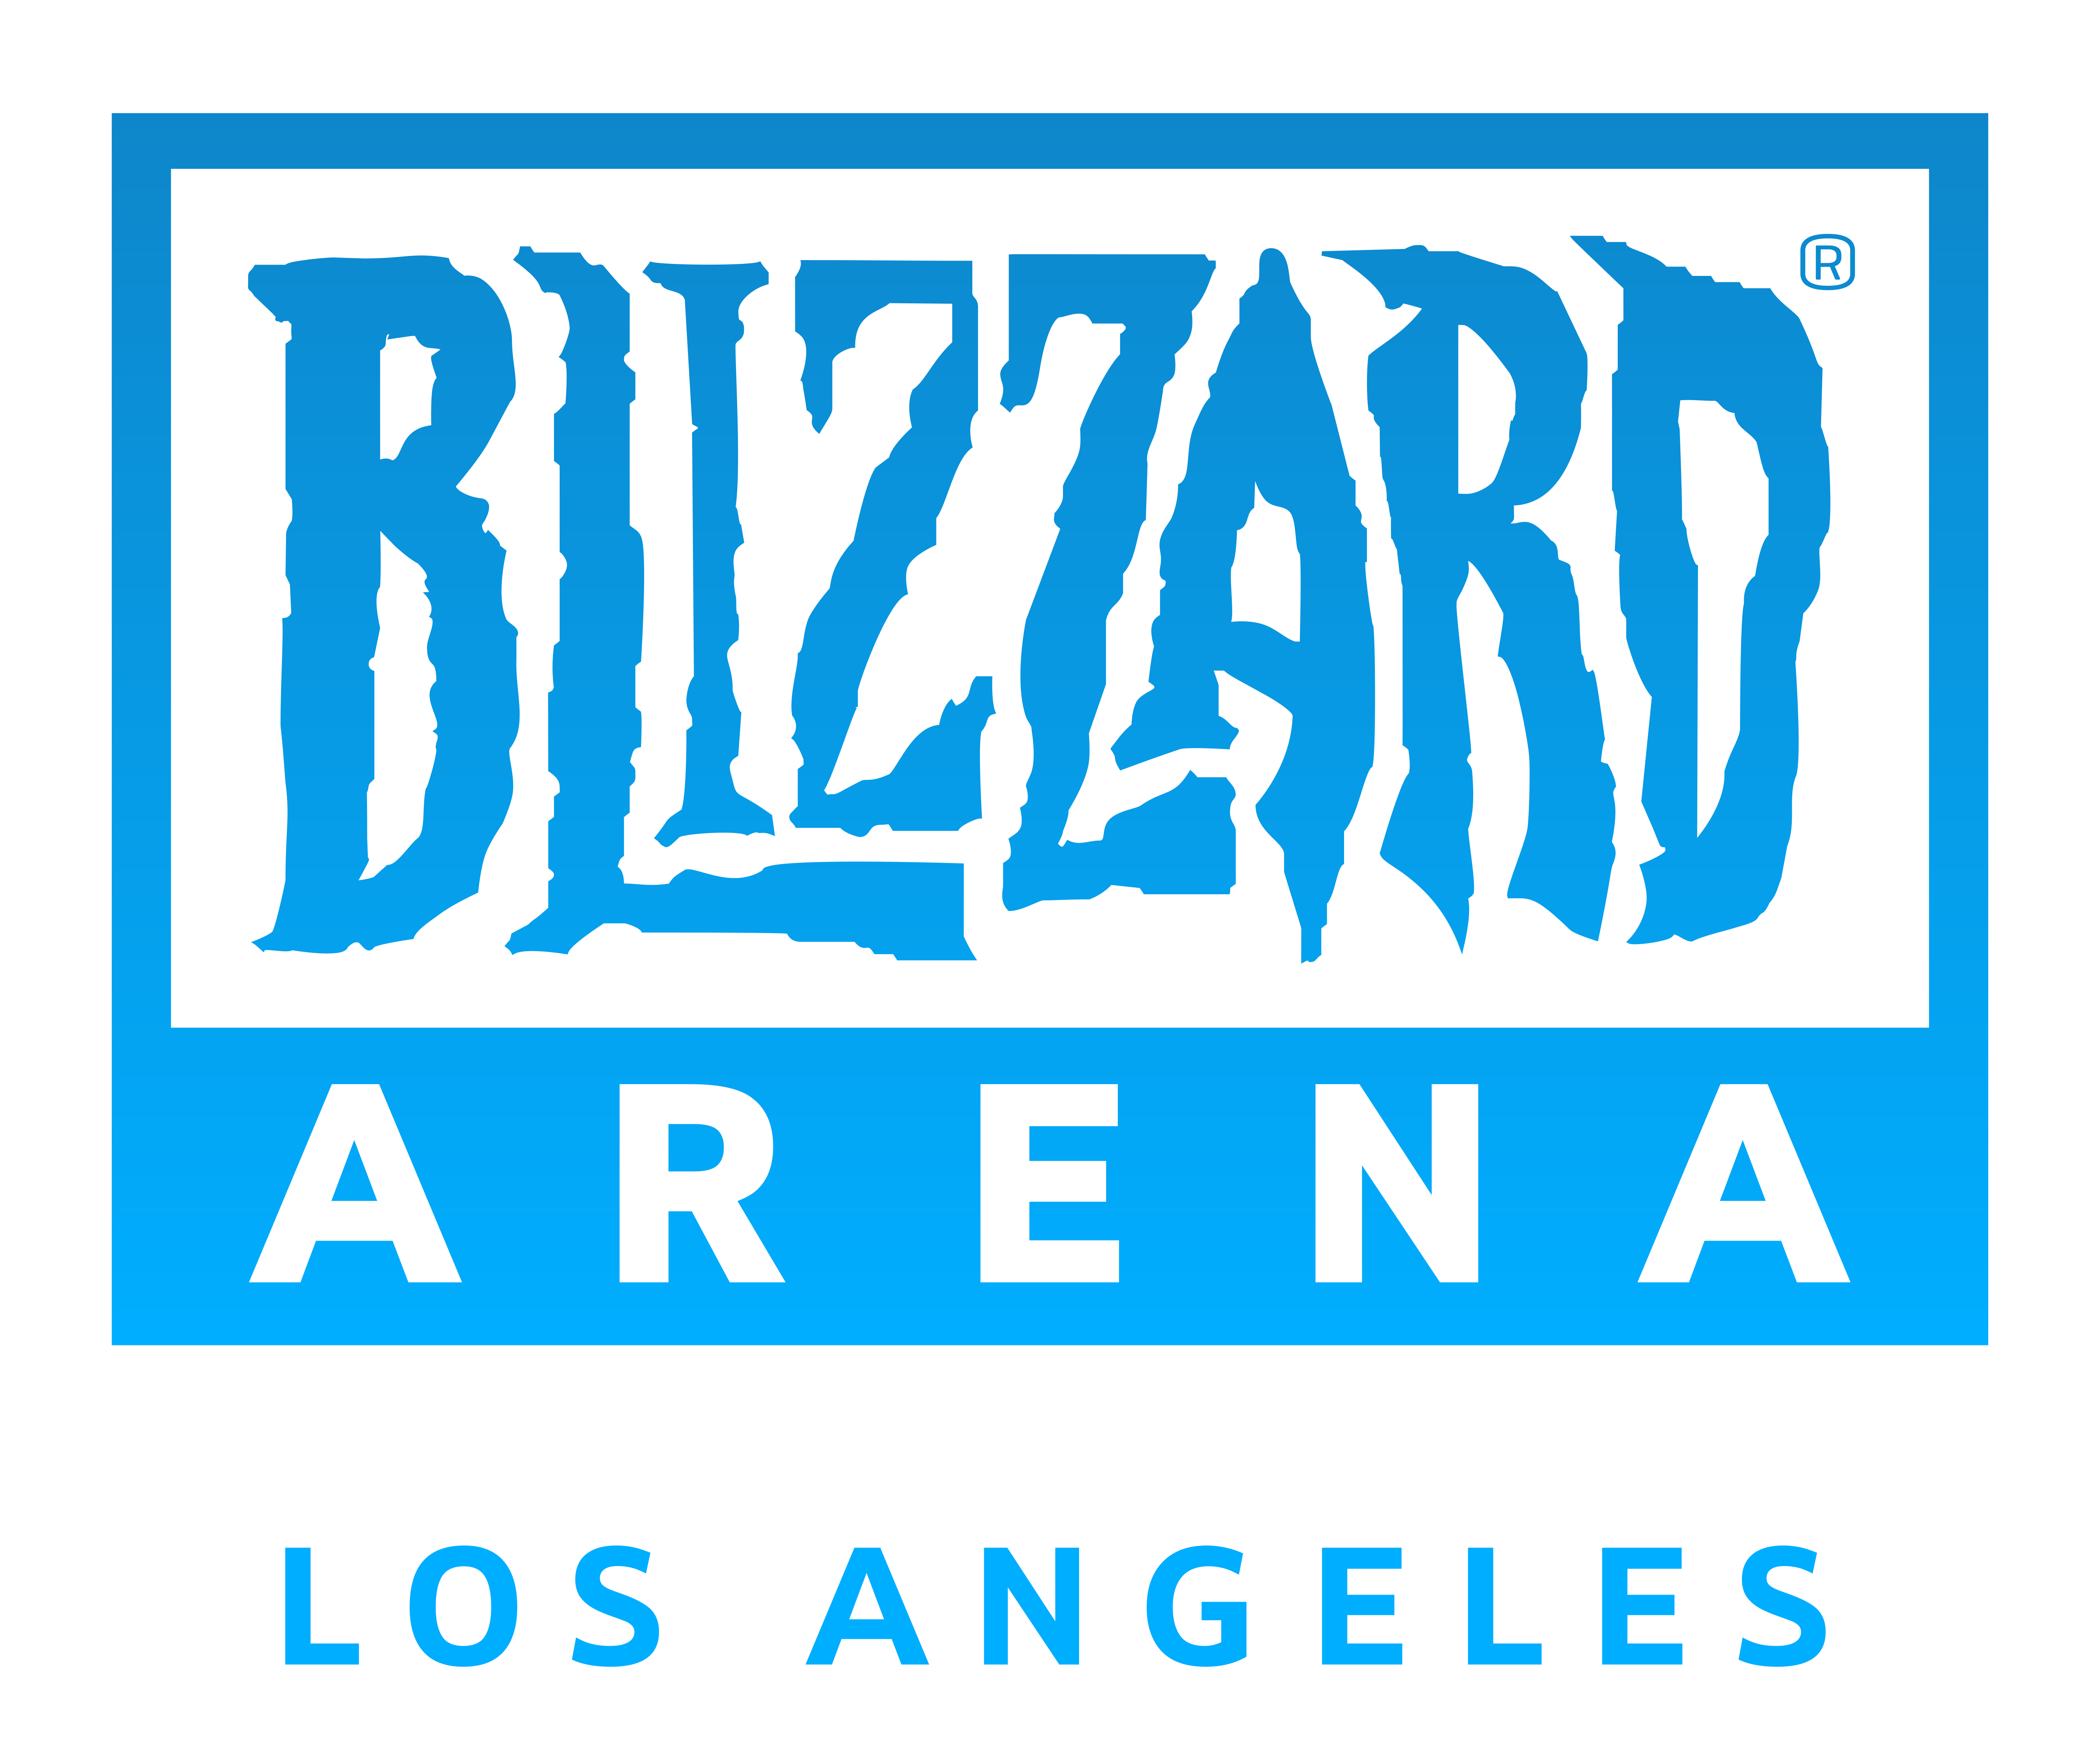 blizz_arena_la_logo